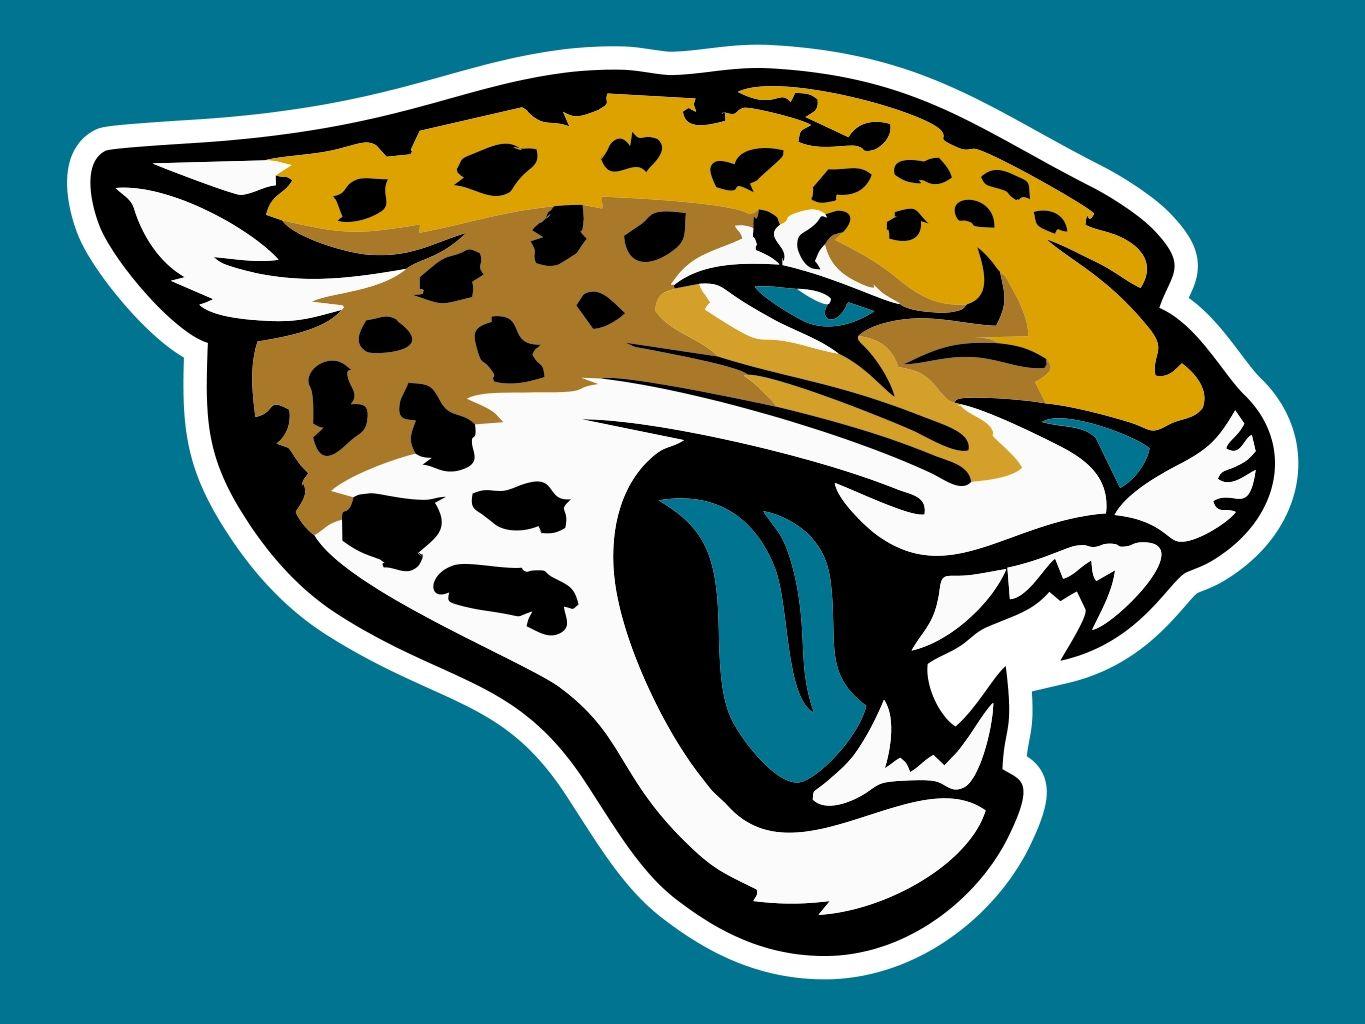 Jaguars Football Team Logo - Jacksonville Jaguars | Major League Sports Wiki | FANDOM powered by ...